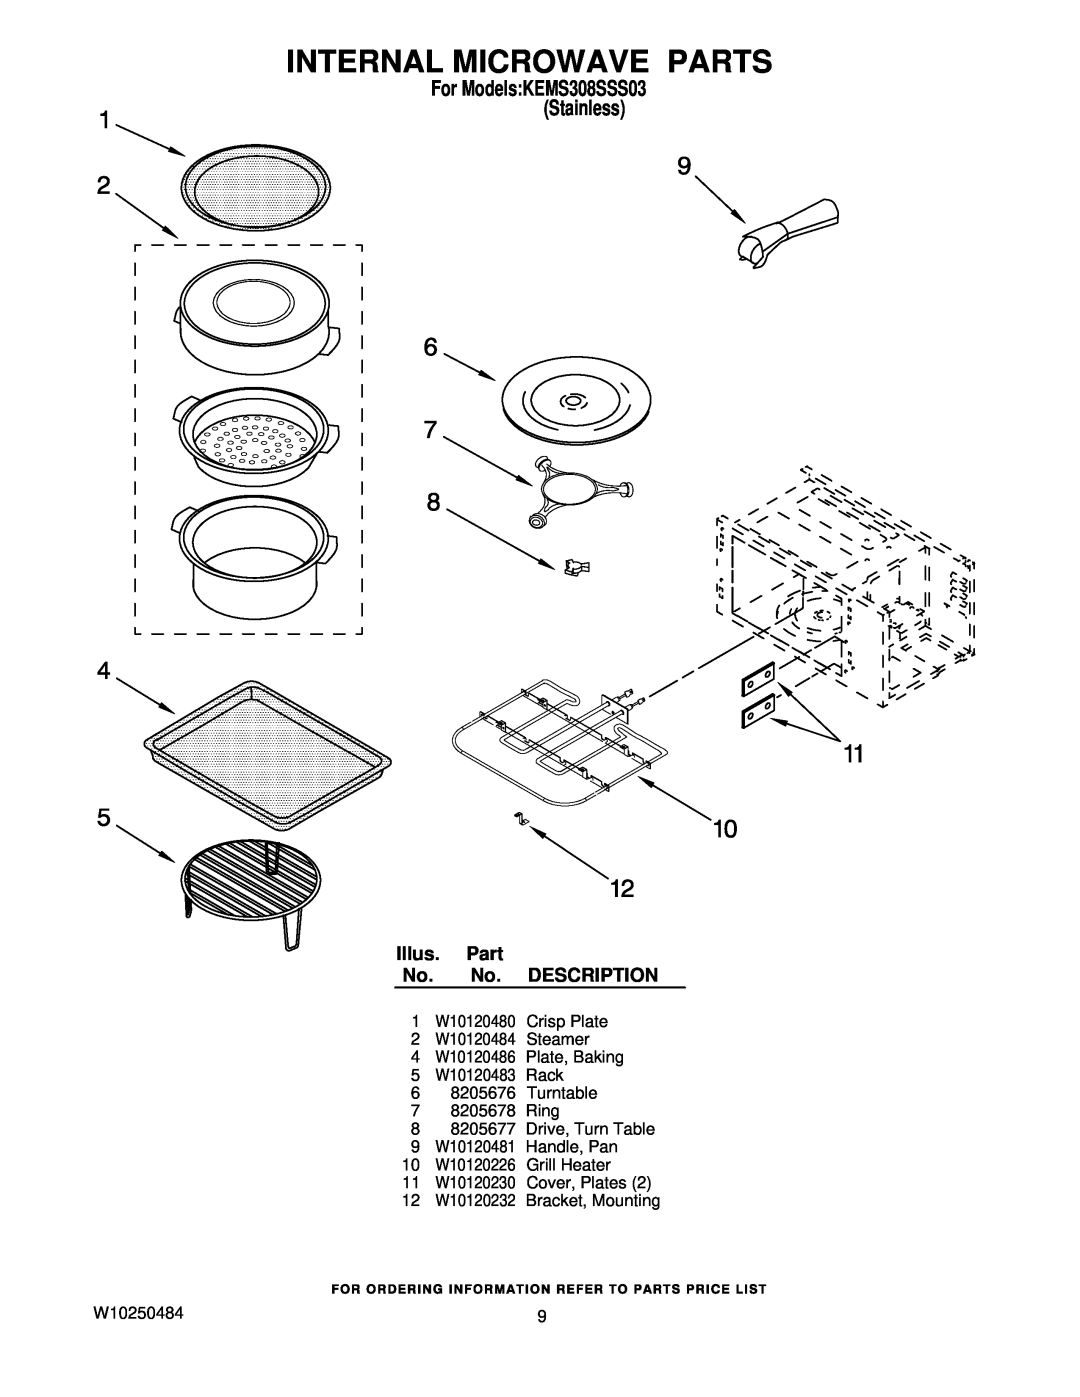 KitchenAid manual Internal Microwave Parts, Illus. Part No. No. DESCRIPTION, For ModelsKEMS308SSS03 Stainless 